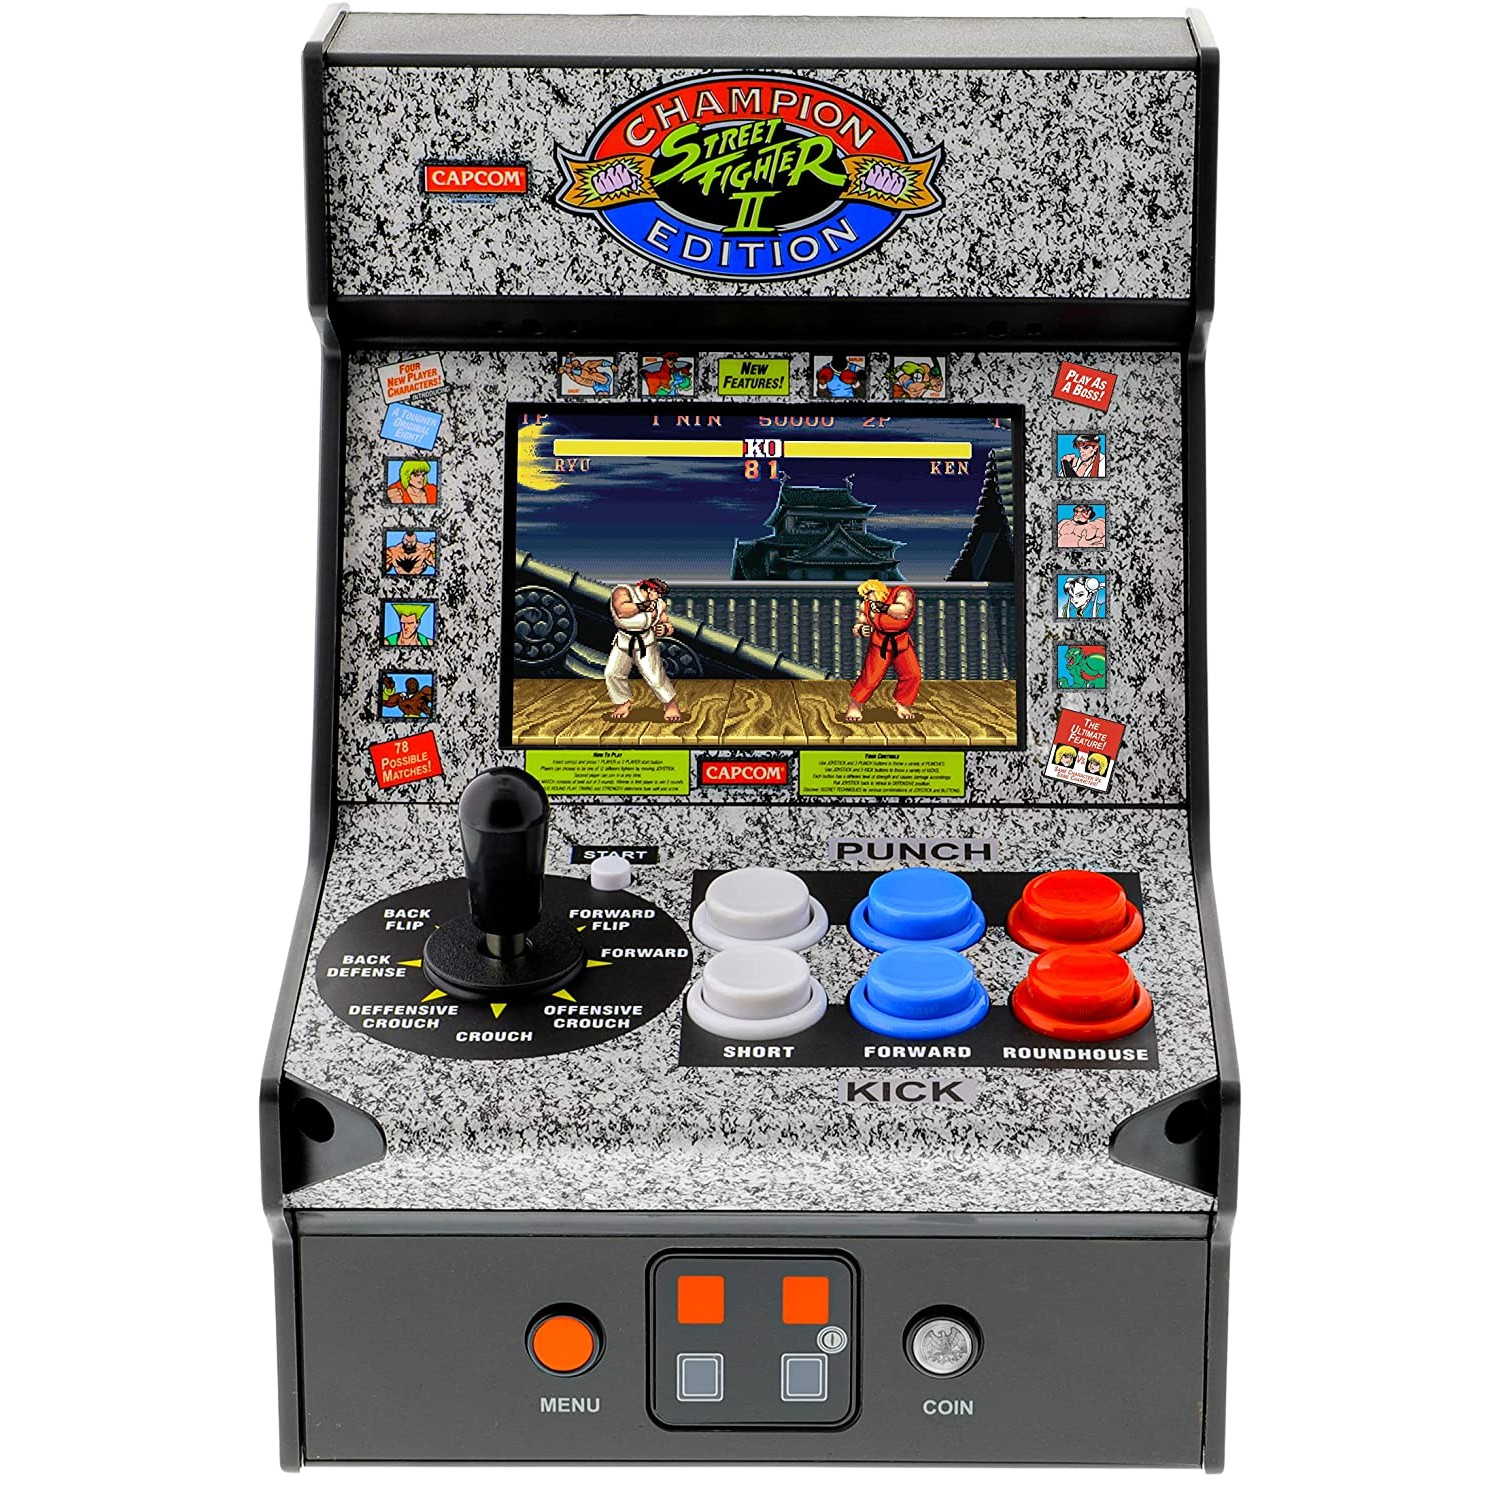 Consola My Arcade dgunl3283 champion street fighter ii negro retro micro player